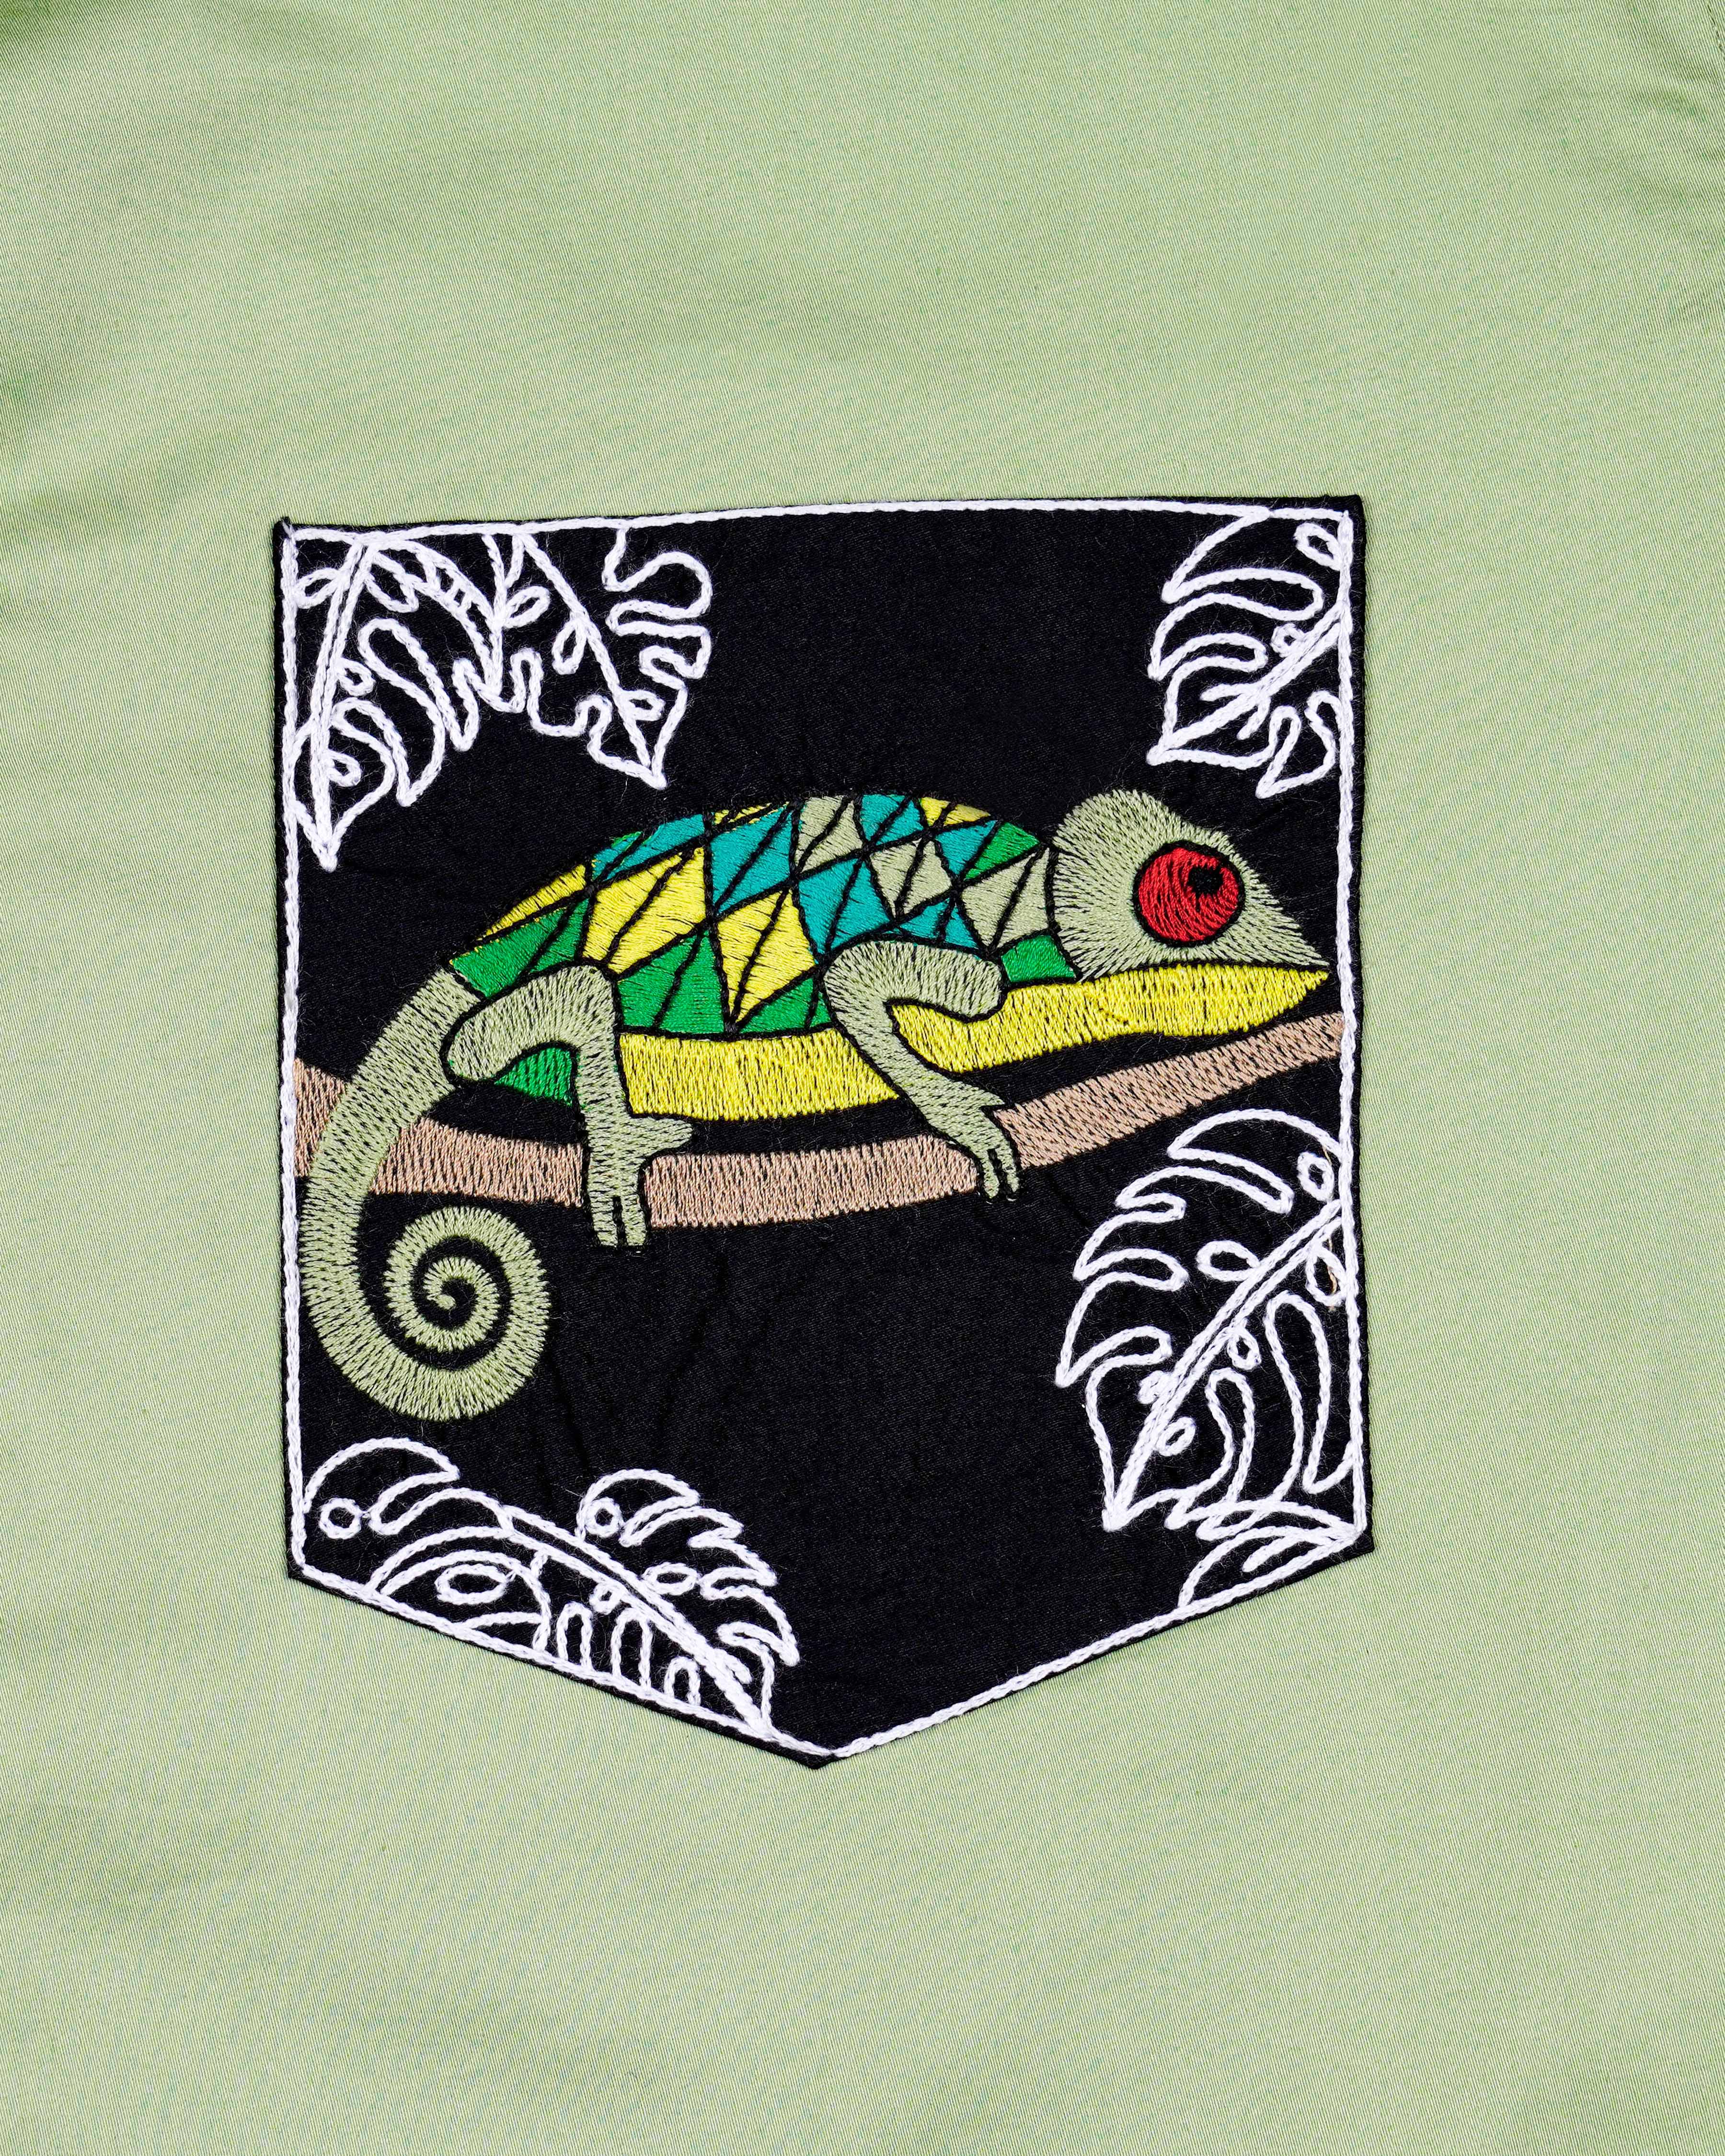 Timberwolf Green with Black Subtle Sheen Patch Pocket Chameleon Embroidered  Super Soft Premium Cotton Shirt 8438-BLK-E005-38, 8438-BLK-E005-H-38, 8438-BLK-E005-39, 8438-BLK-E005-H-39, 8438-BLK-E005-40, 8438-BLK-E005-H-40, 8438-BLK-E005-42, 8438-BLK-E005-H-42, 8438-BLK-E005-44, 8438-BLK-E005-H-44, 8438-BLK-E005-46, 8438-BLK-E005-H-46, 8438-BLK-E005-48, 8438-BLK-E005-H-48, 8438-BLK-E005-50, 8438-BLK-E005-H-50, 8438-BLK-E005-52, 8438-BLK-E005-H-52